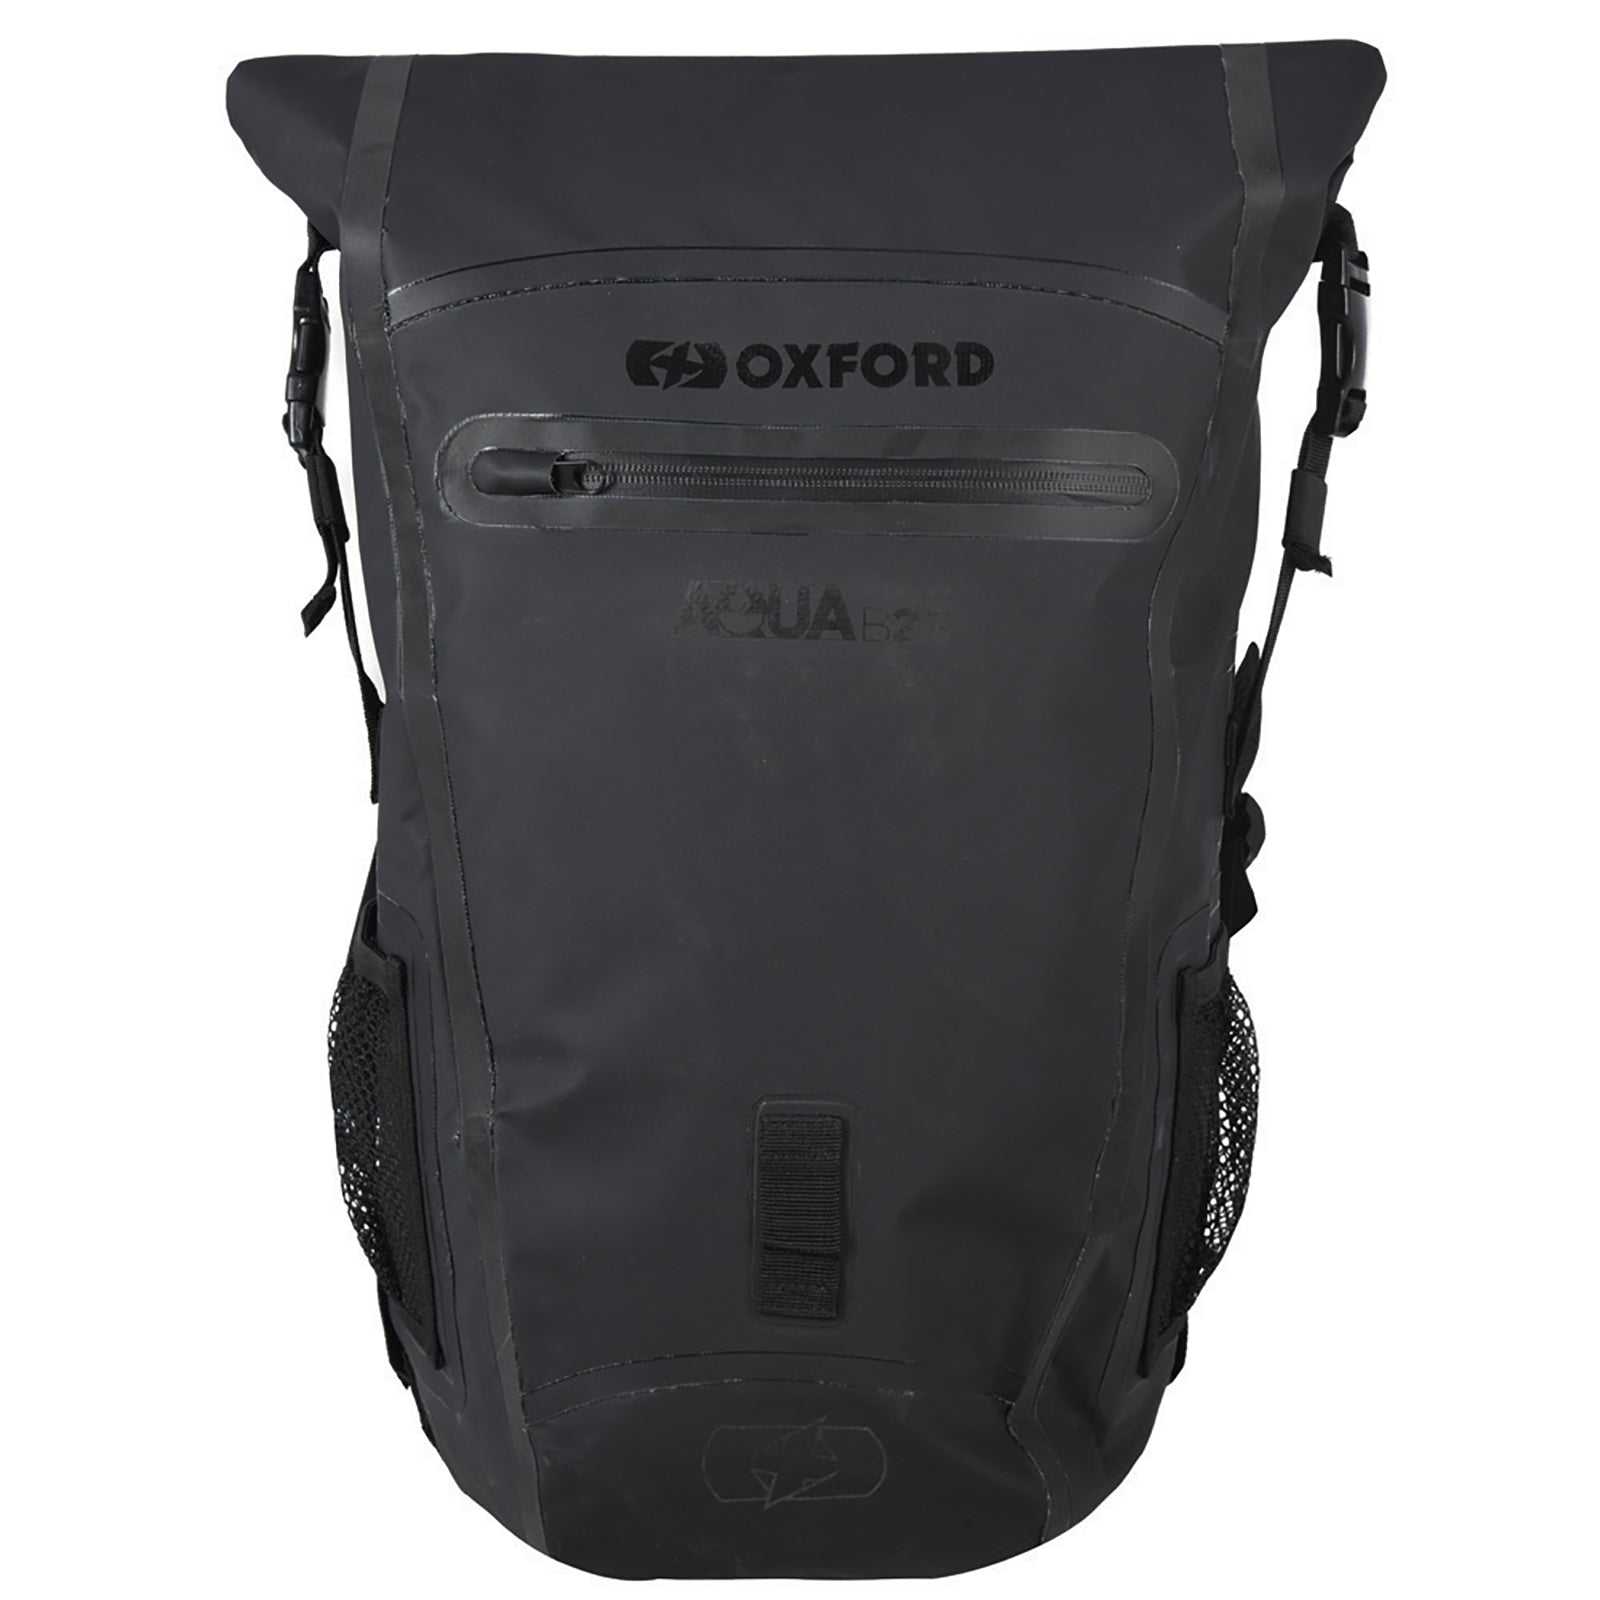 Oxford, Oxford Backpack Aqua B25 - Black / Grey